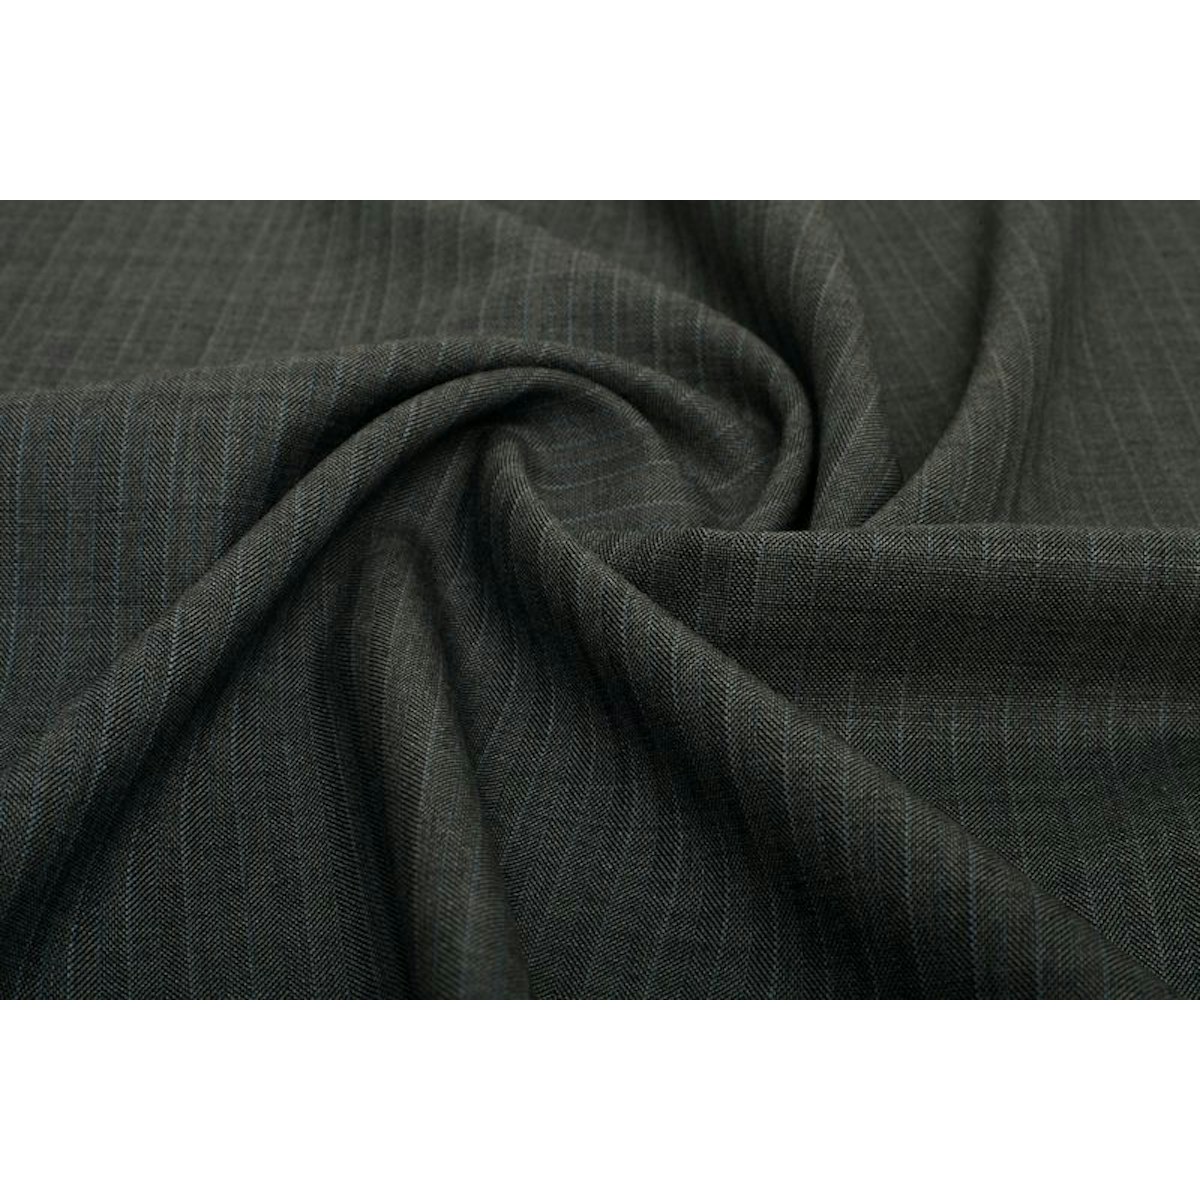 InStitchu Suit Fabric 136